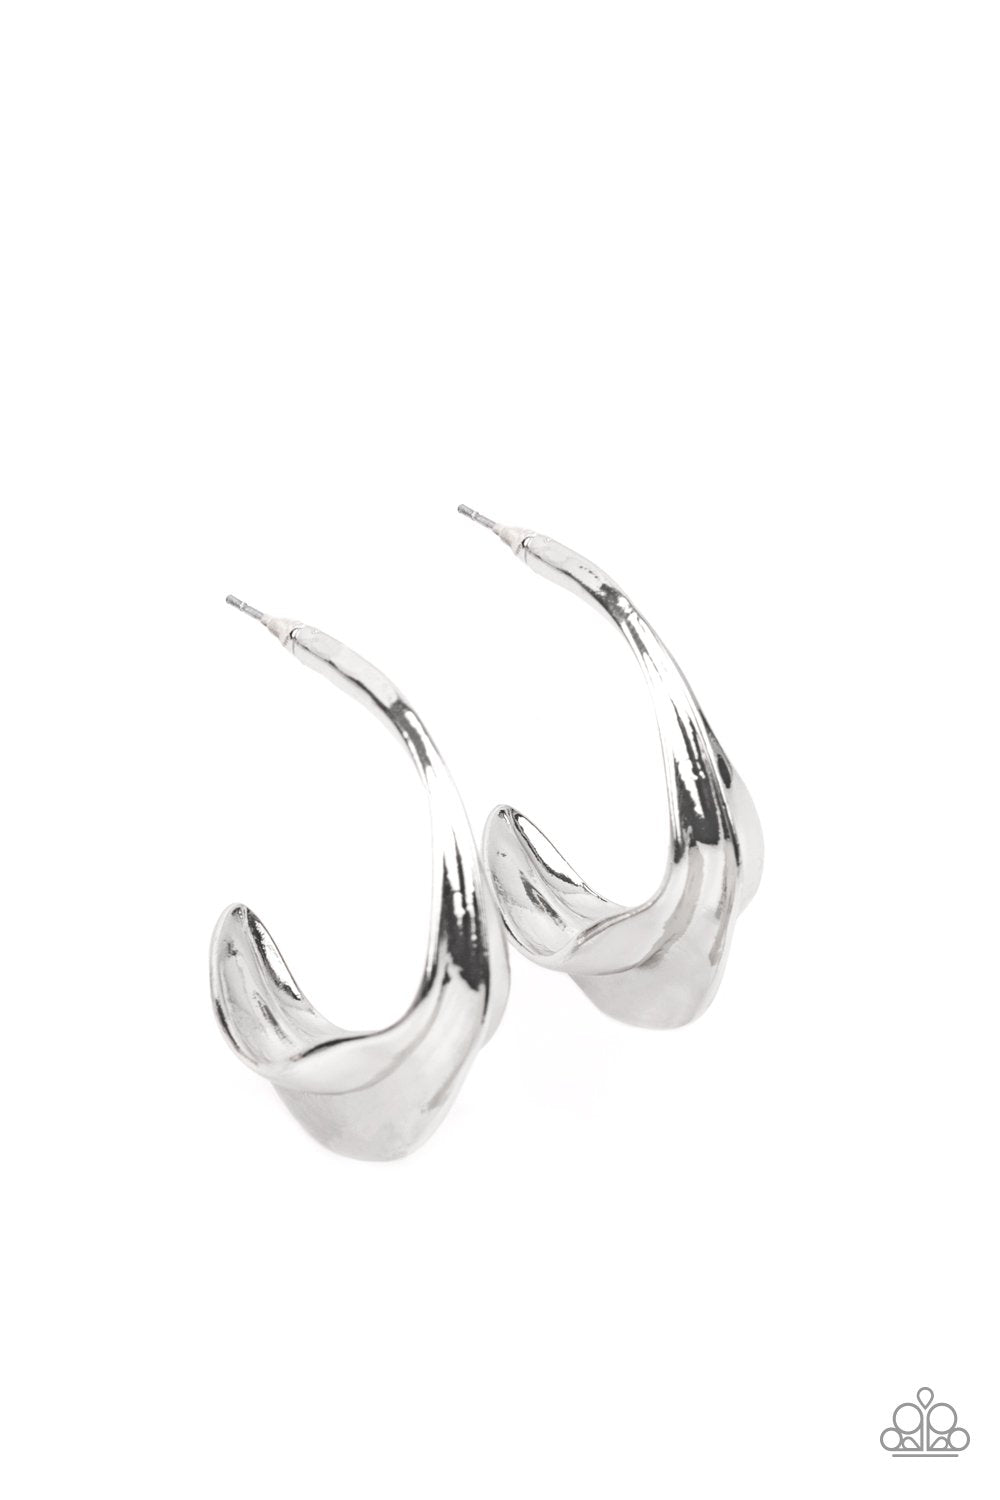 Modern Meltdown Silver Hoop Earrings - Paparazzi Accessories- lightbox - CarasShop.com - $5 Jewelry by Cara Jewels